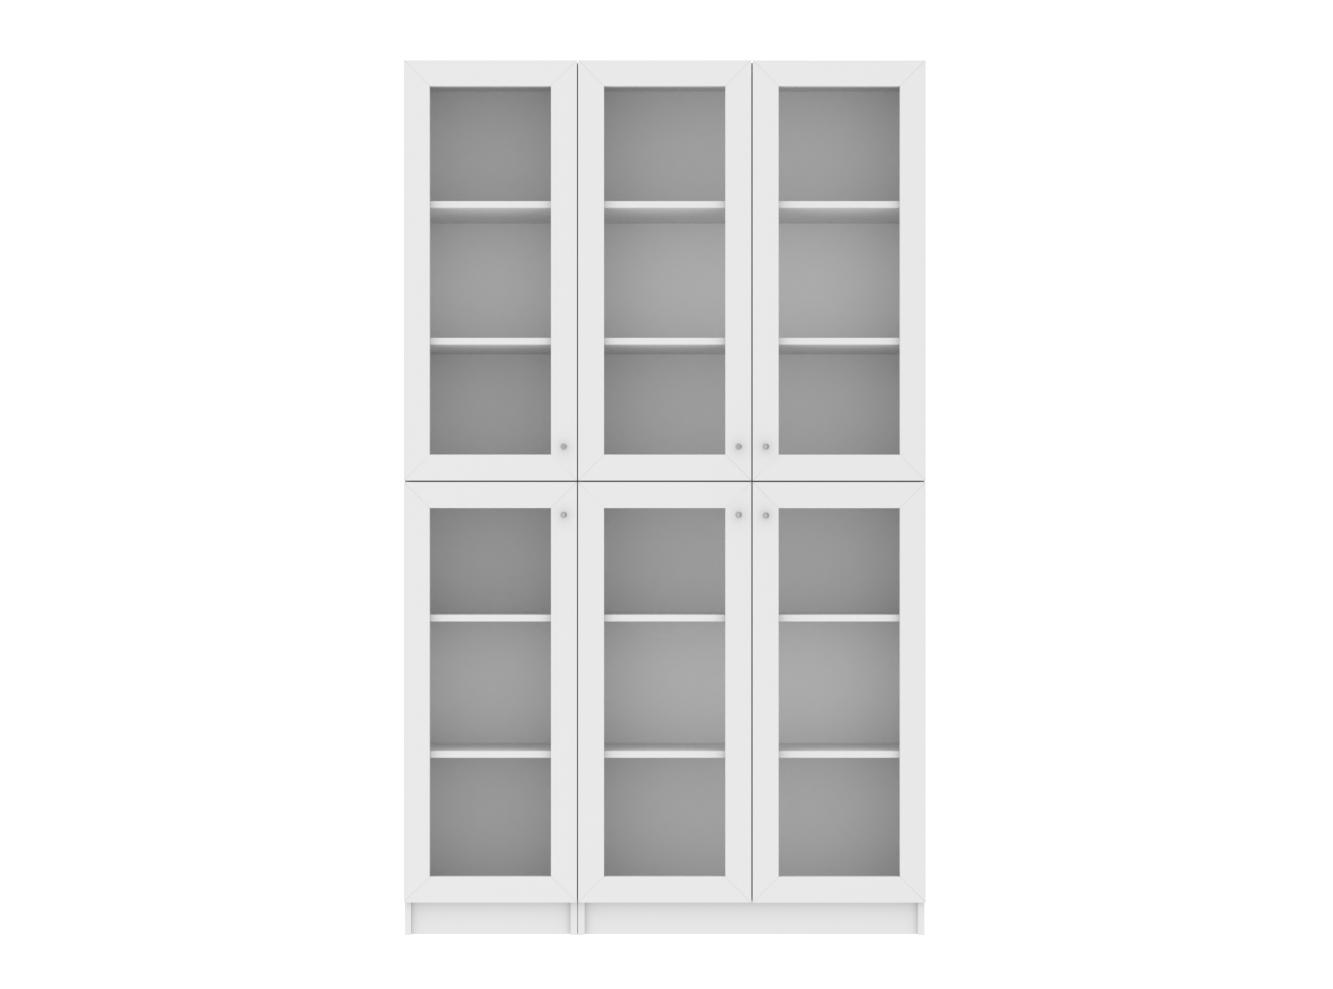  Книжный шкаф Билли 339 white ИКЕА (IKEA) изображение товара